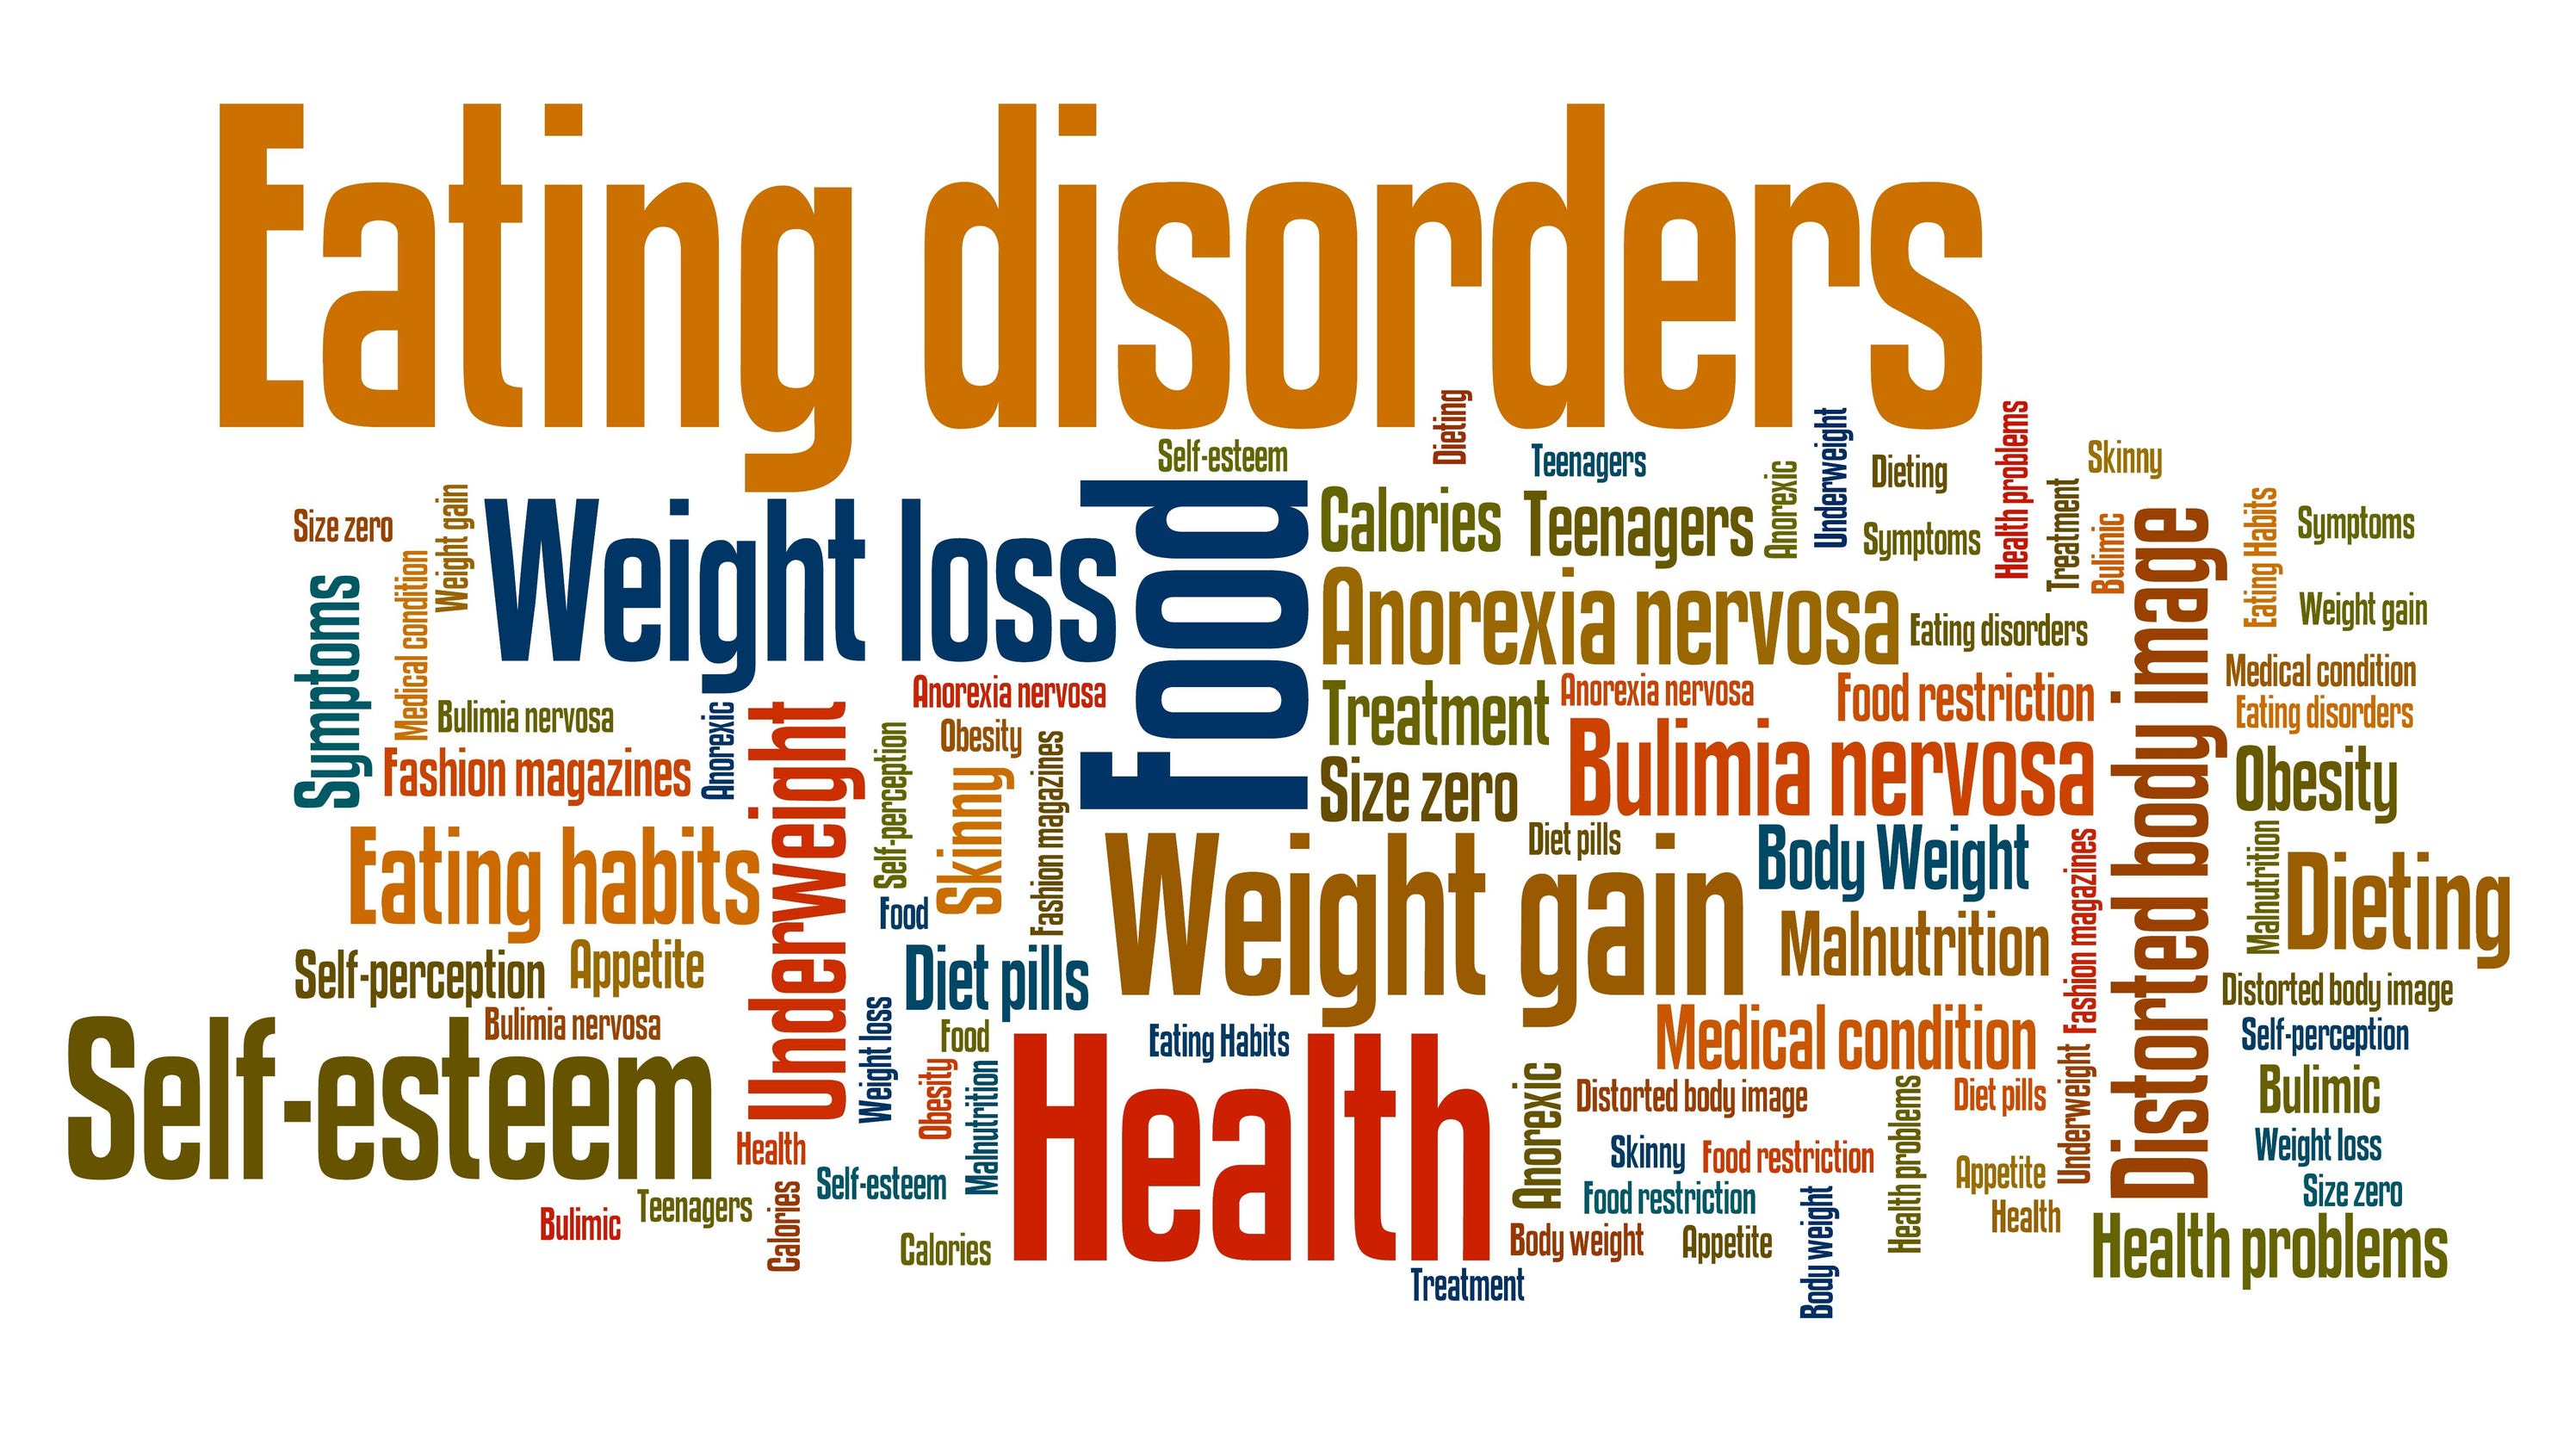 Goals Of National Eating Disorder Awareness Week Remain